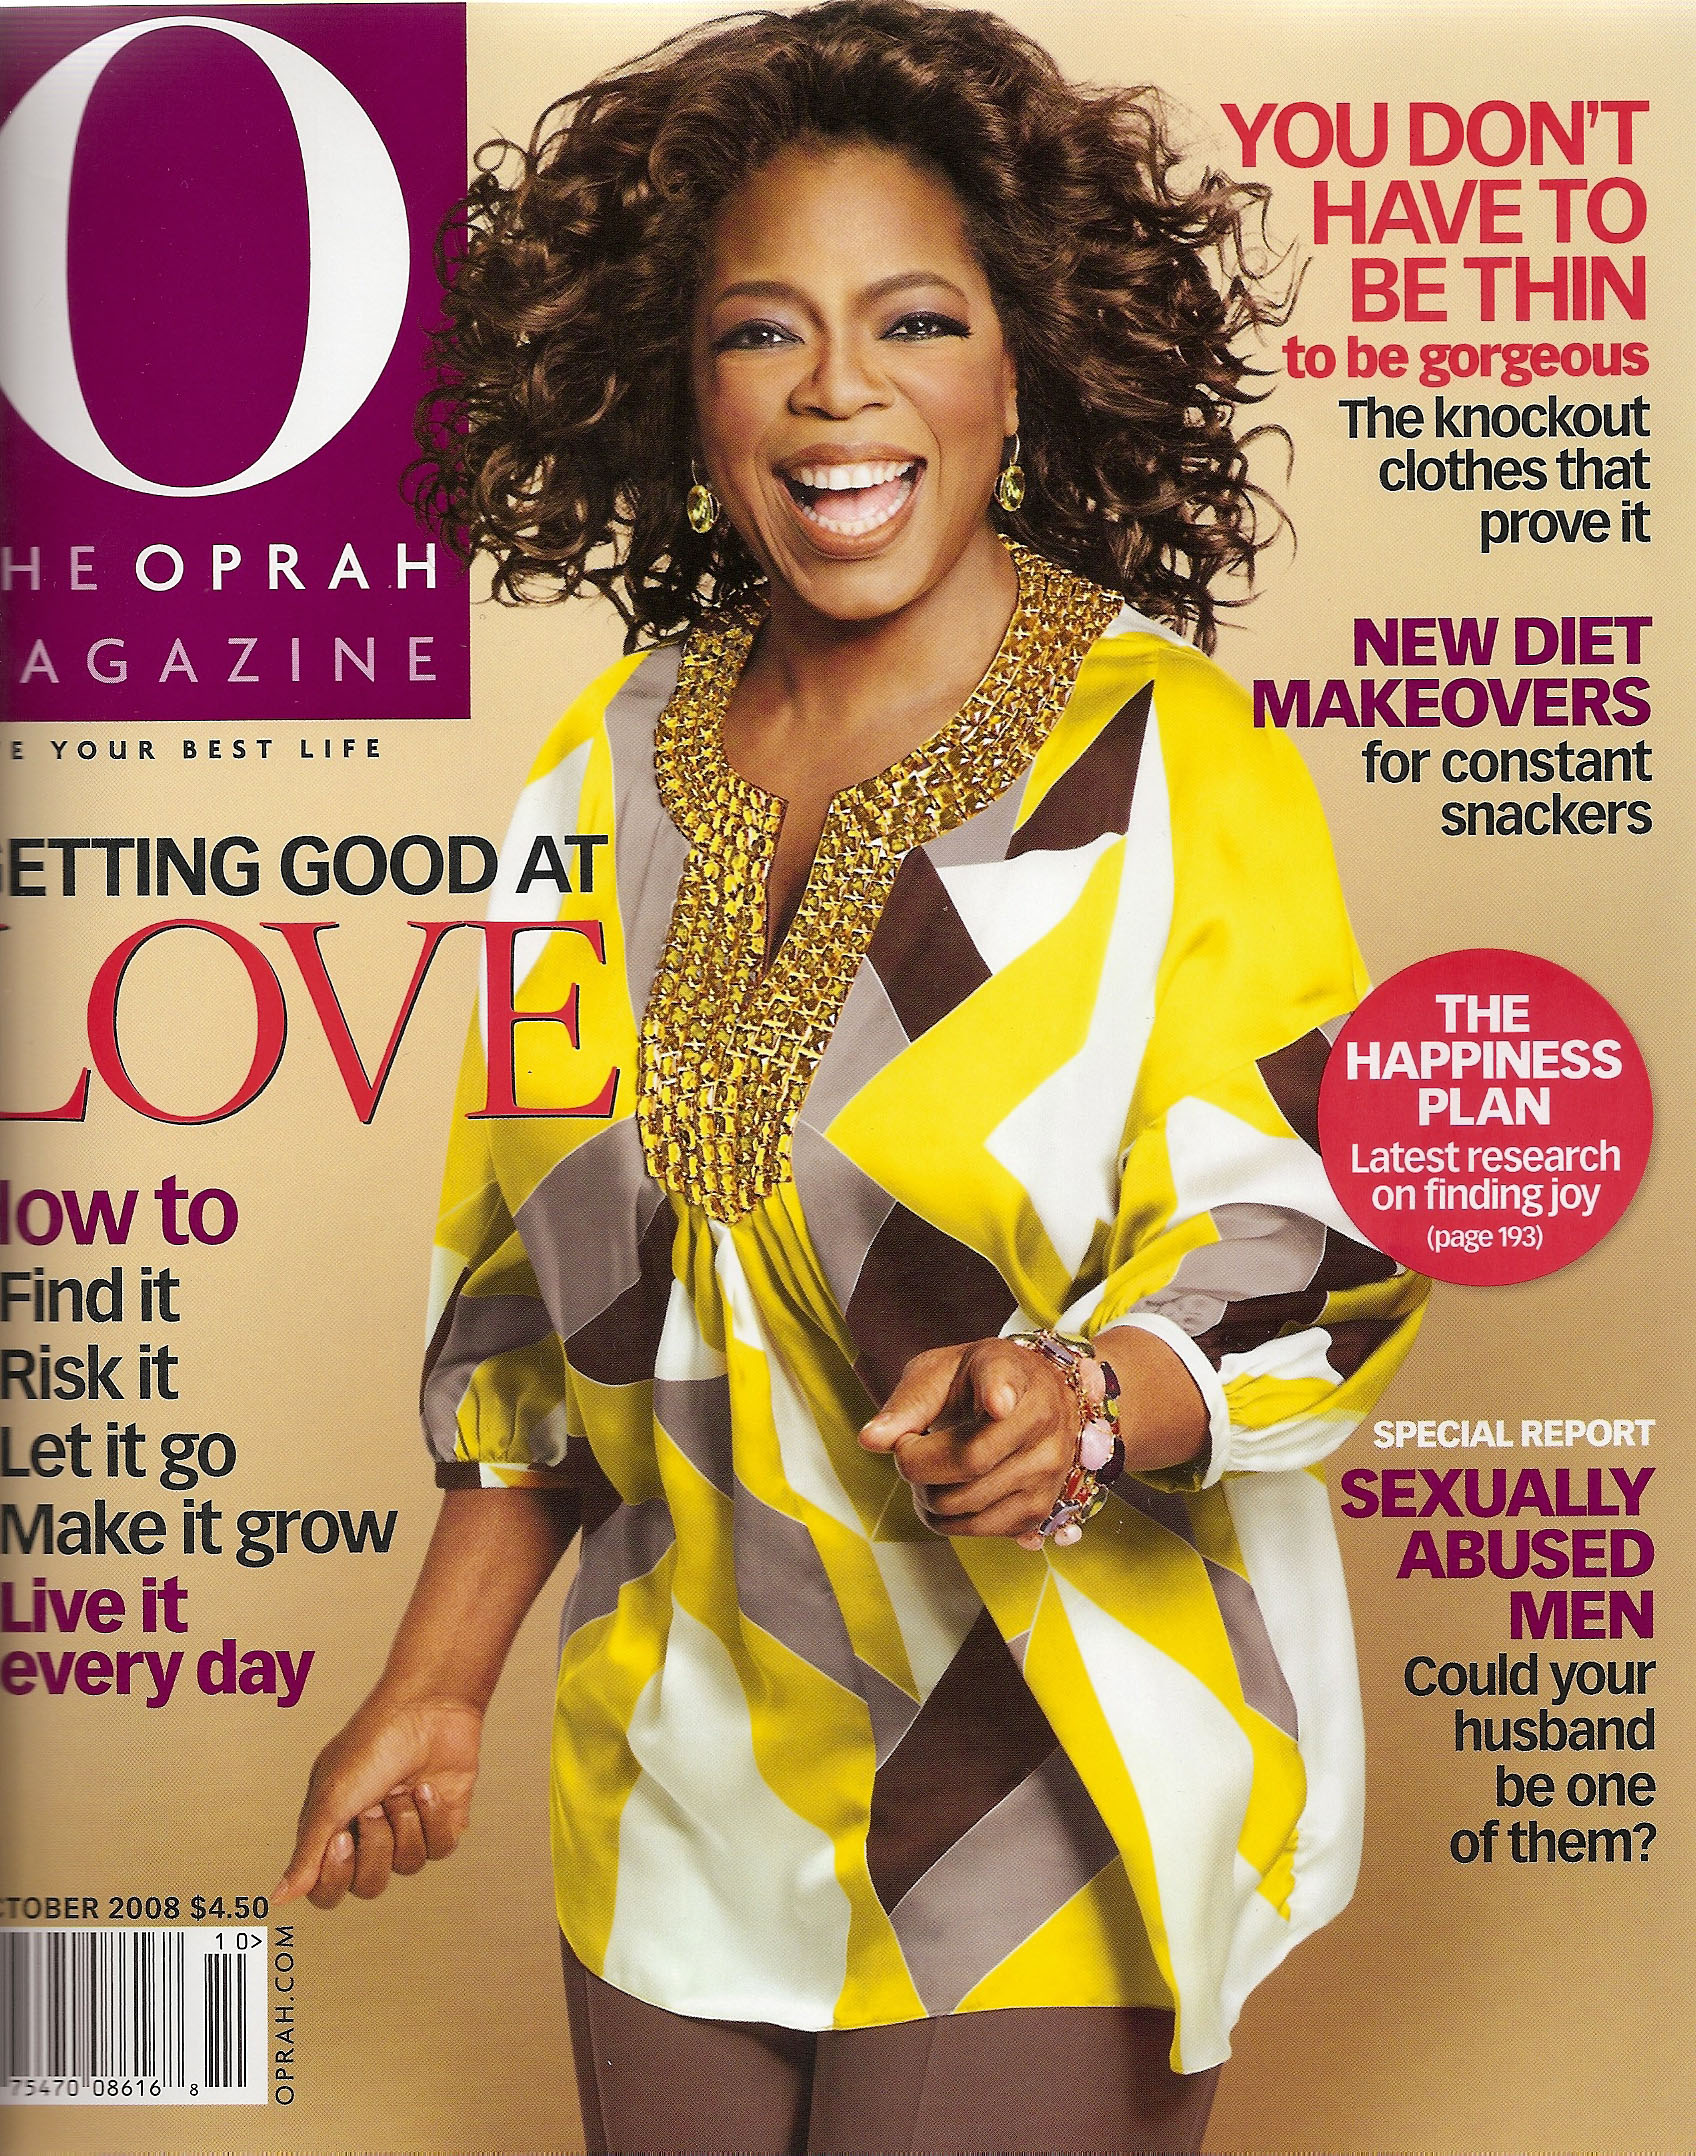 O magazine. Журнал опры Уинфри. O the Oprah Magazine. Журнал «Опра» и «Опра Дейли».